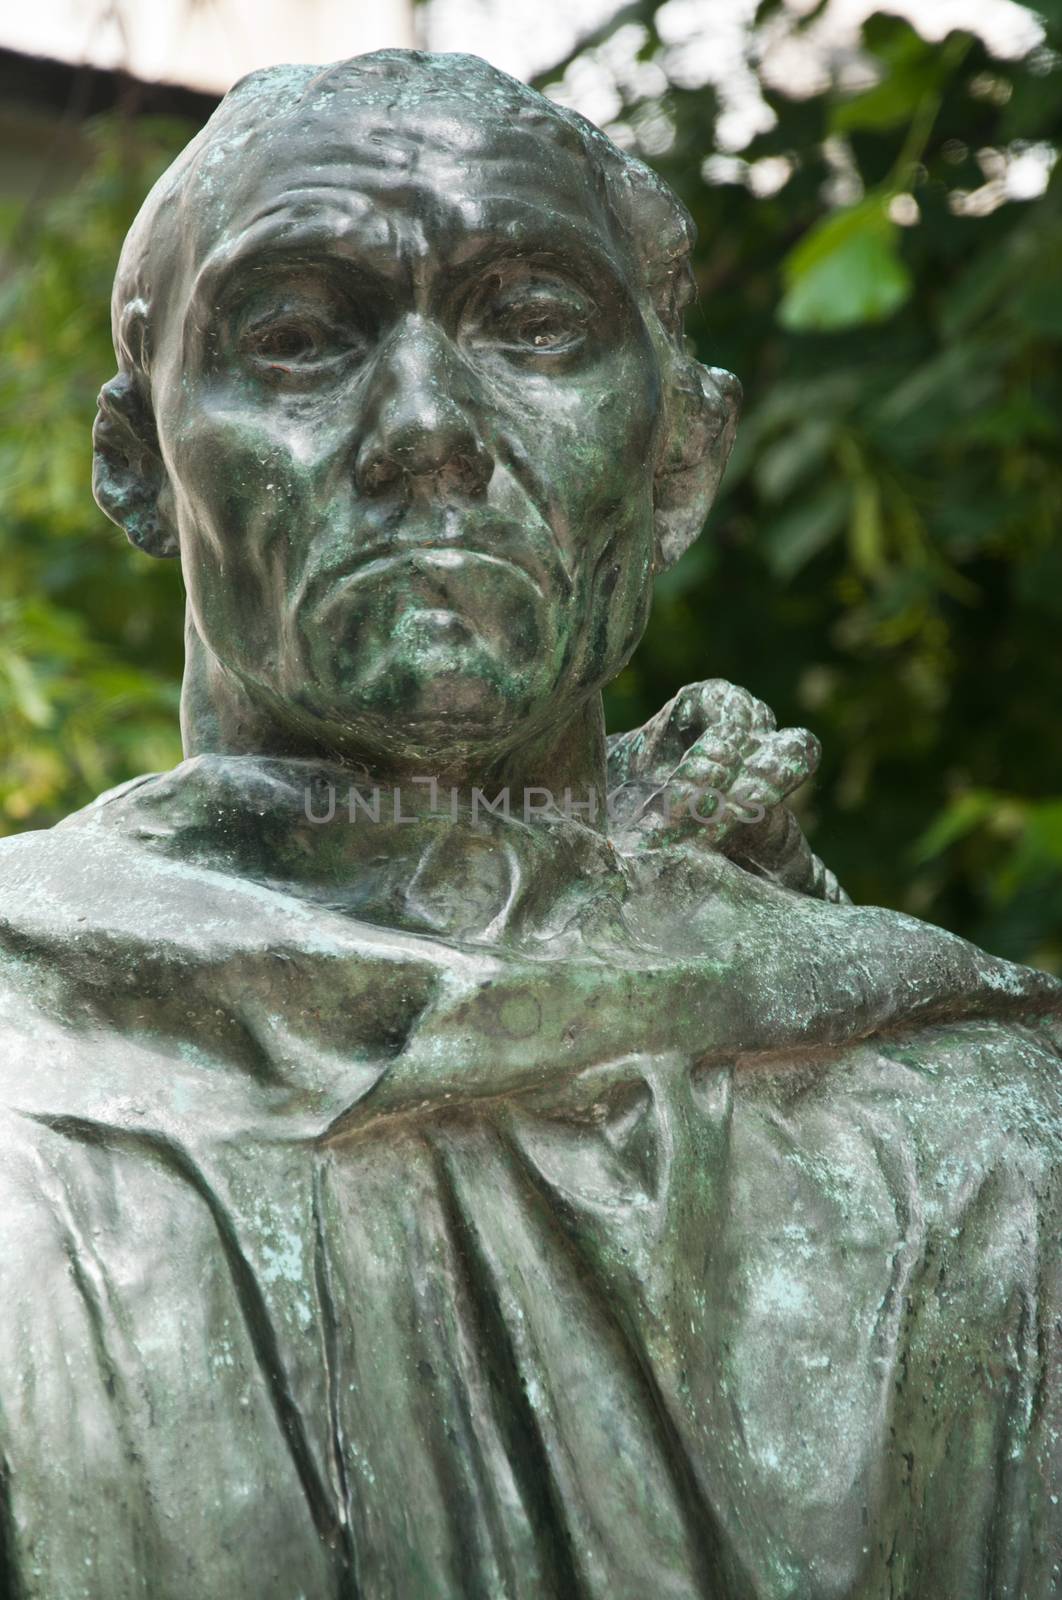 statue in Rodin museum in Paris - taken 14 June 2013 by NeydtStock